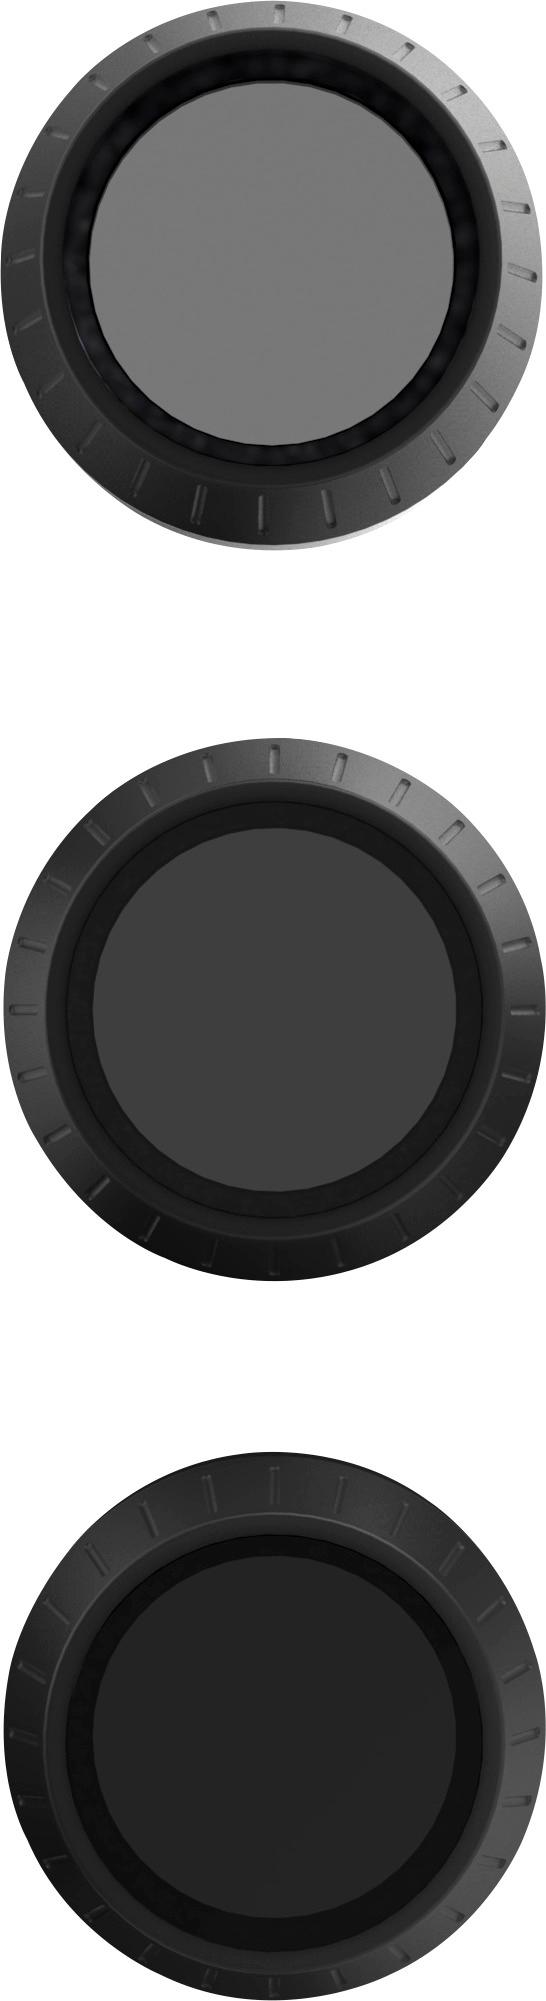 Angle View: PolarPro - Circular Polarizer and Neutral Density Lens Filters for DJI Mavic Pro and Platinum (3-Pack)